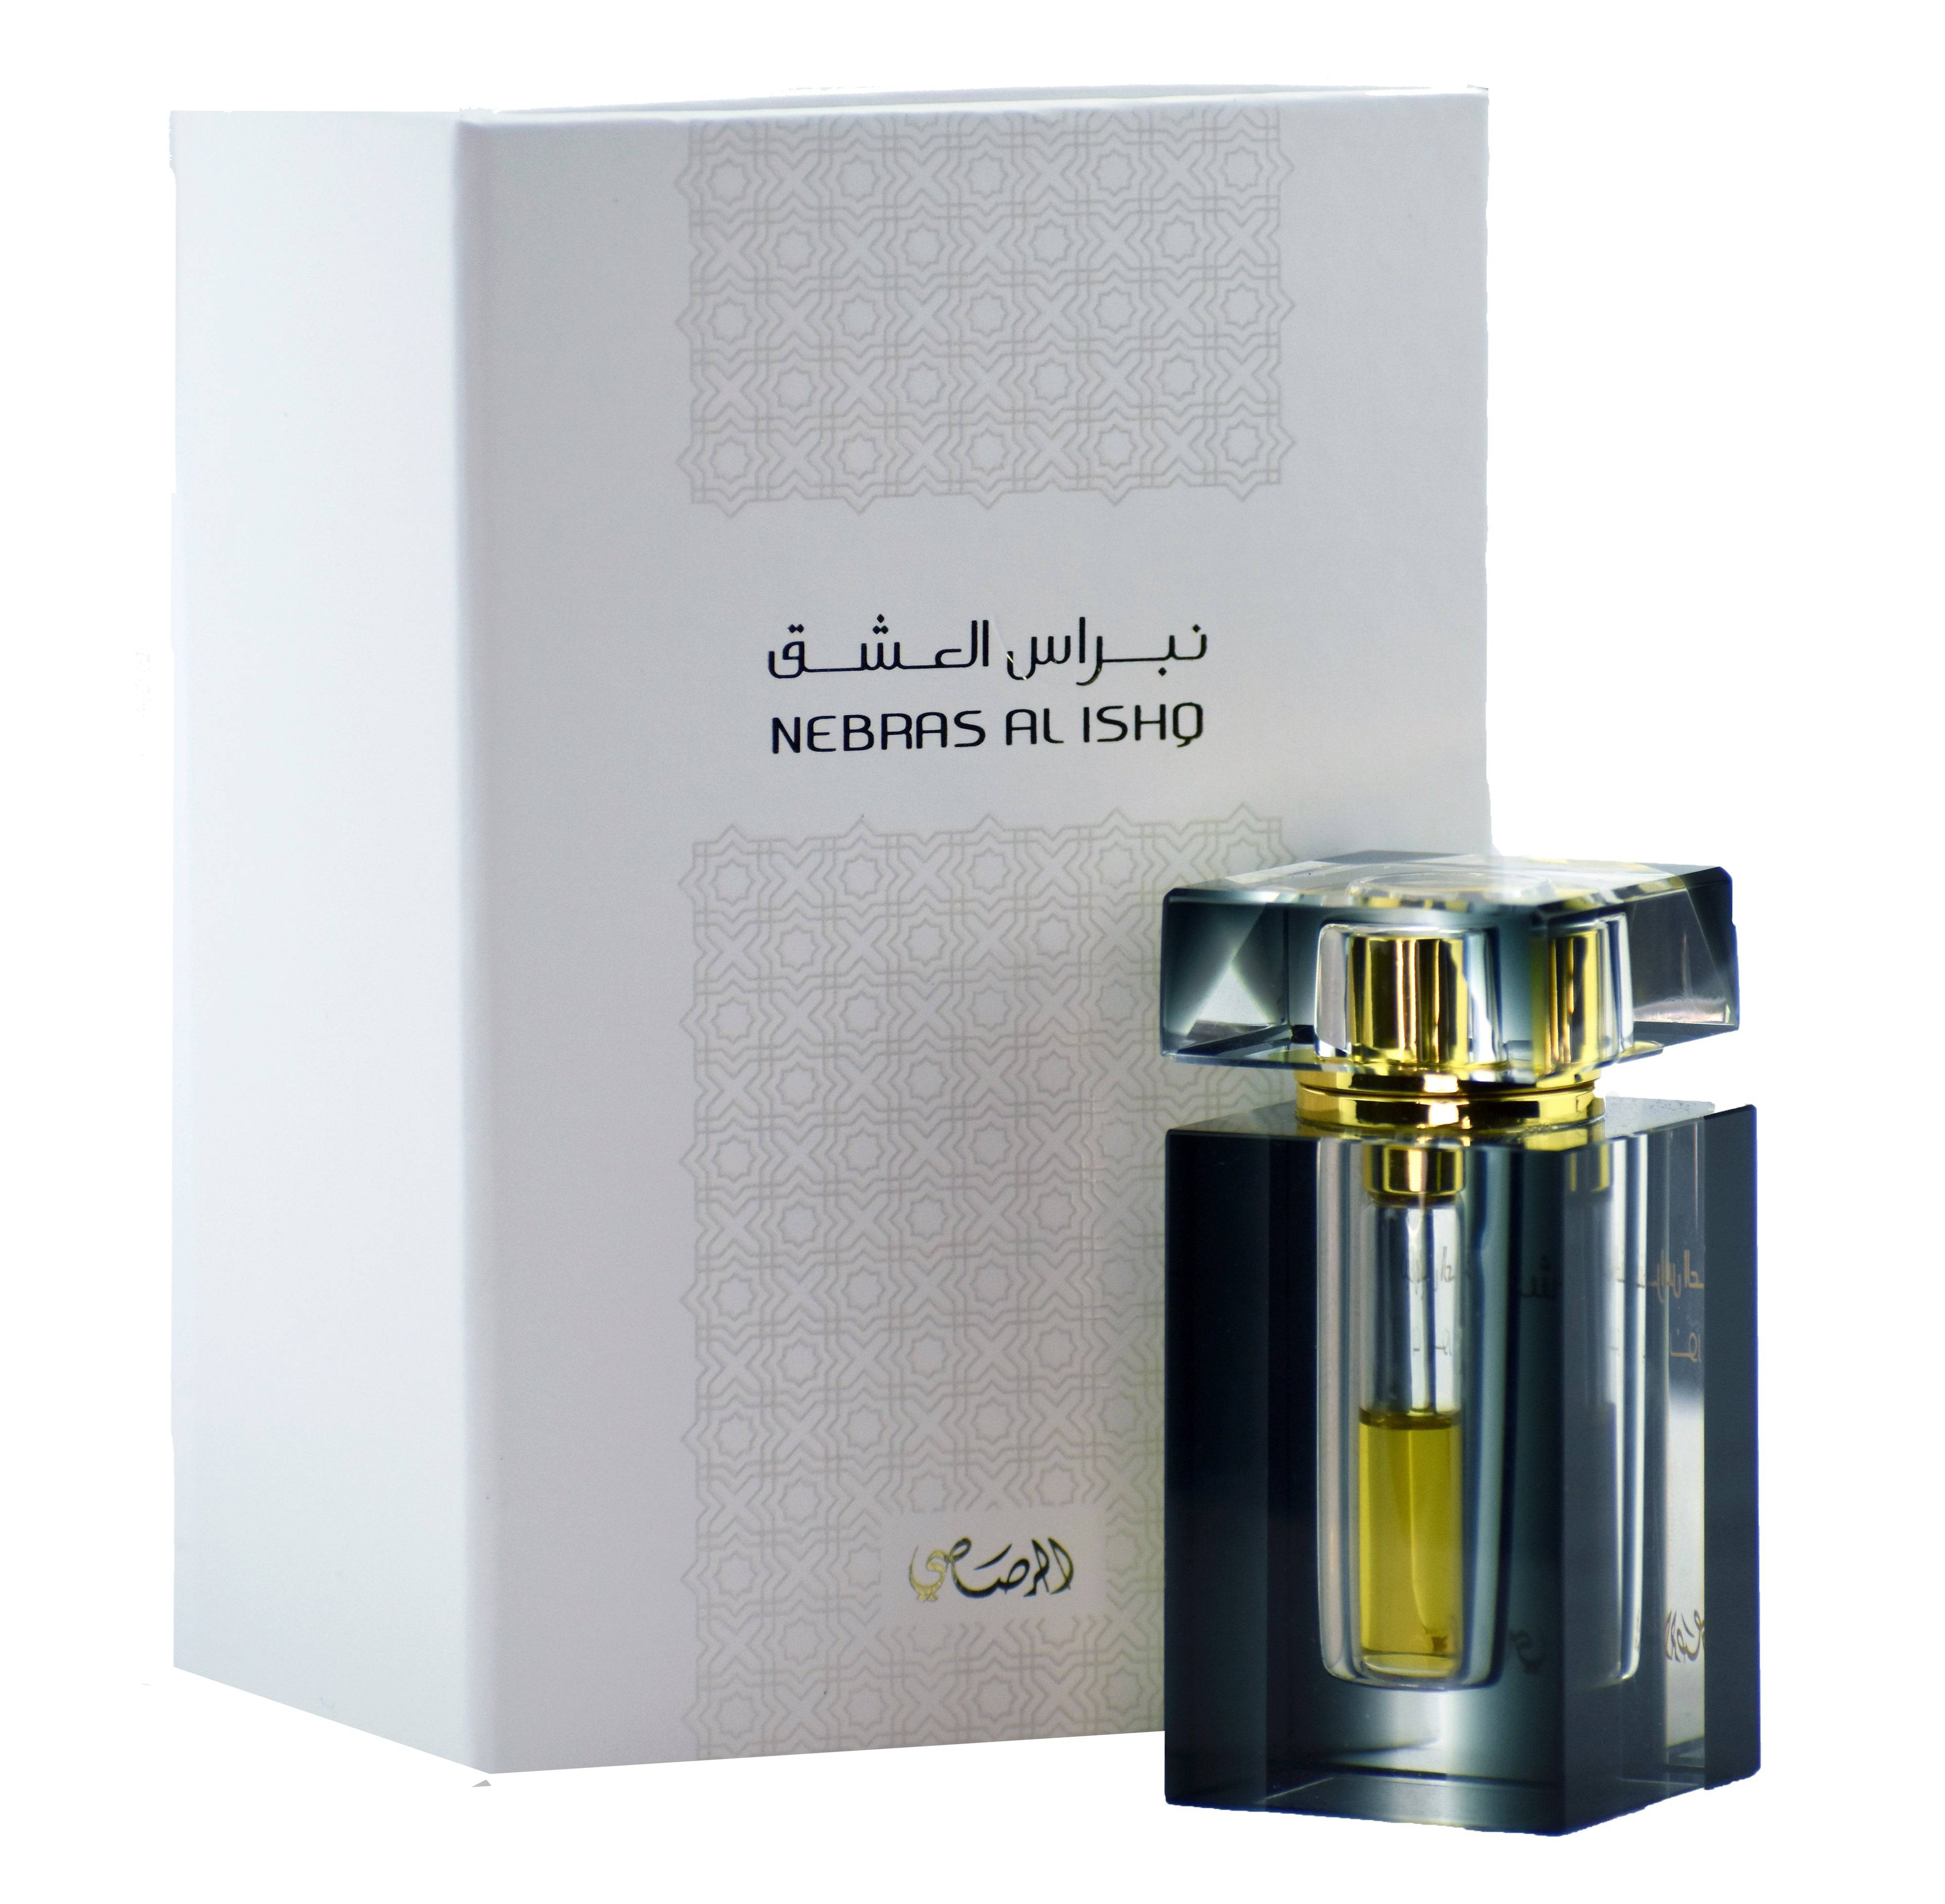 Nebras Al Ishq Noor Perfume Oil -  6 ML (0.2 oz) by Rasasi - Intense oud